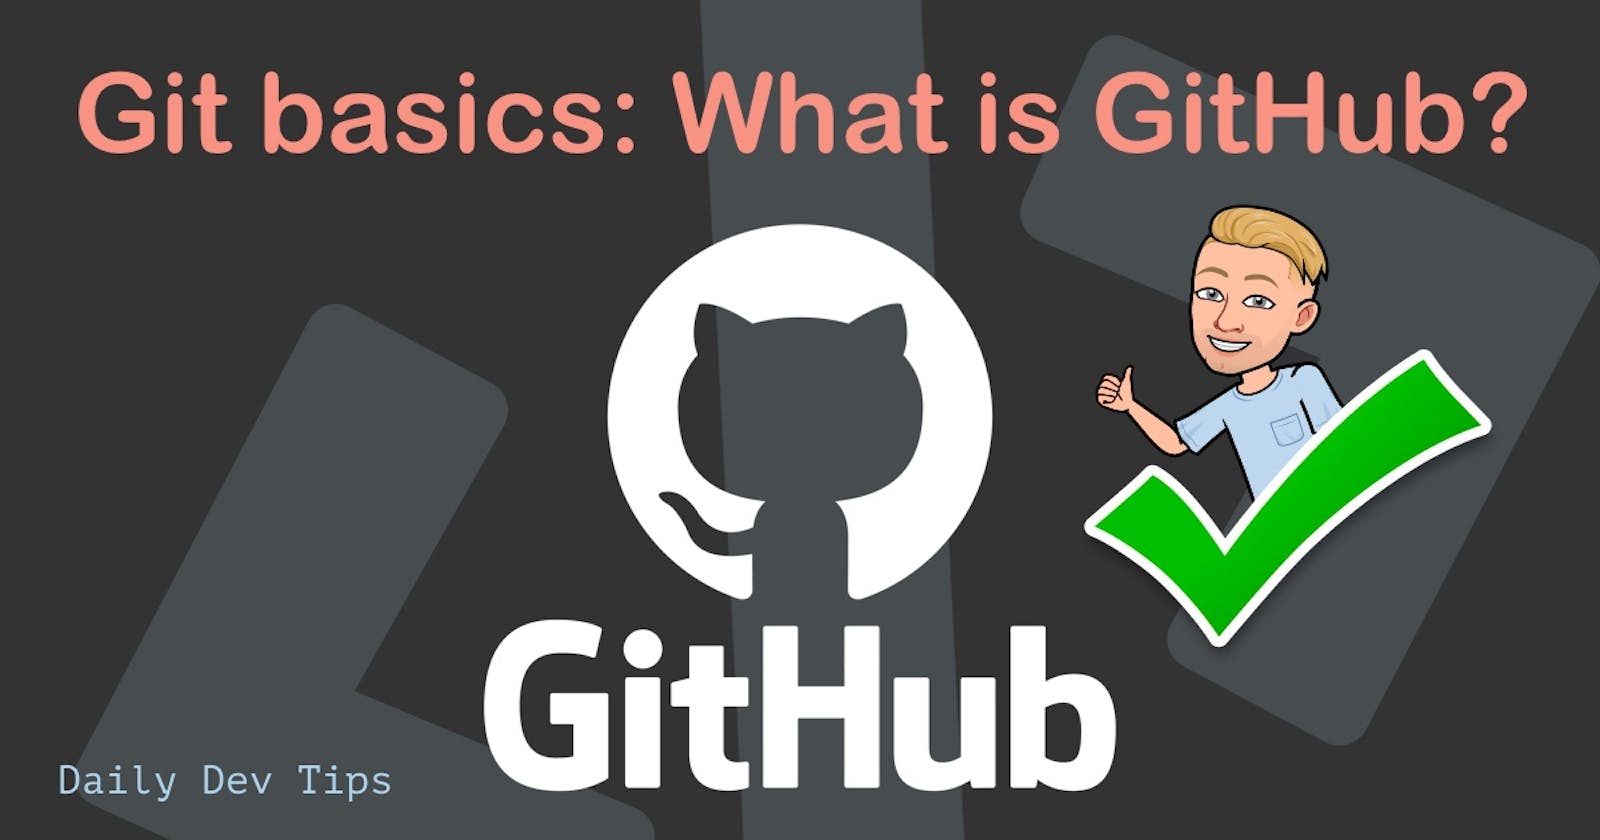 Git basics: What is GitHub?